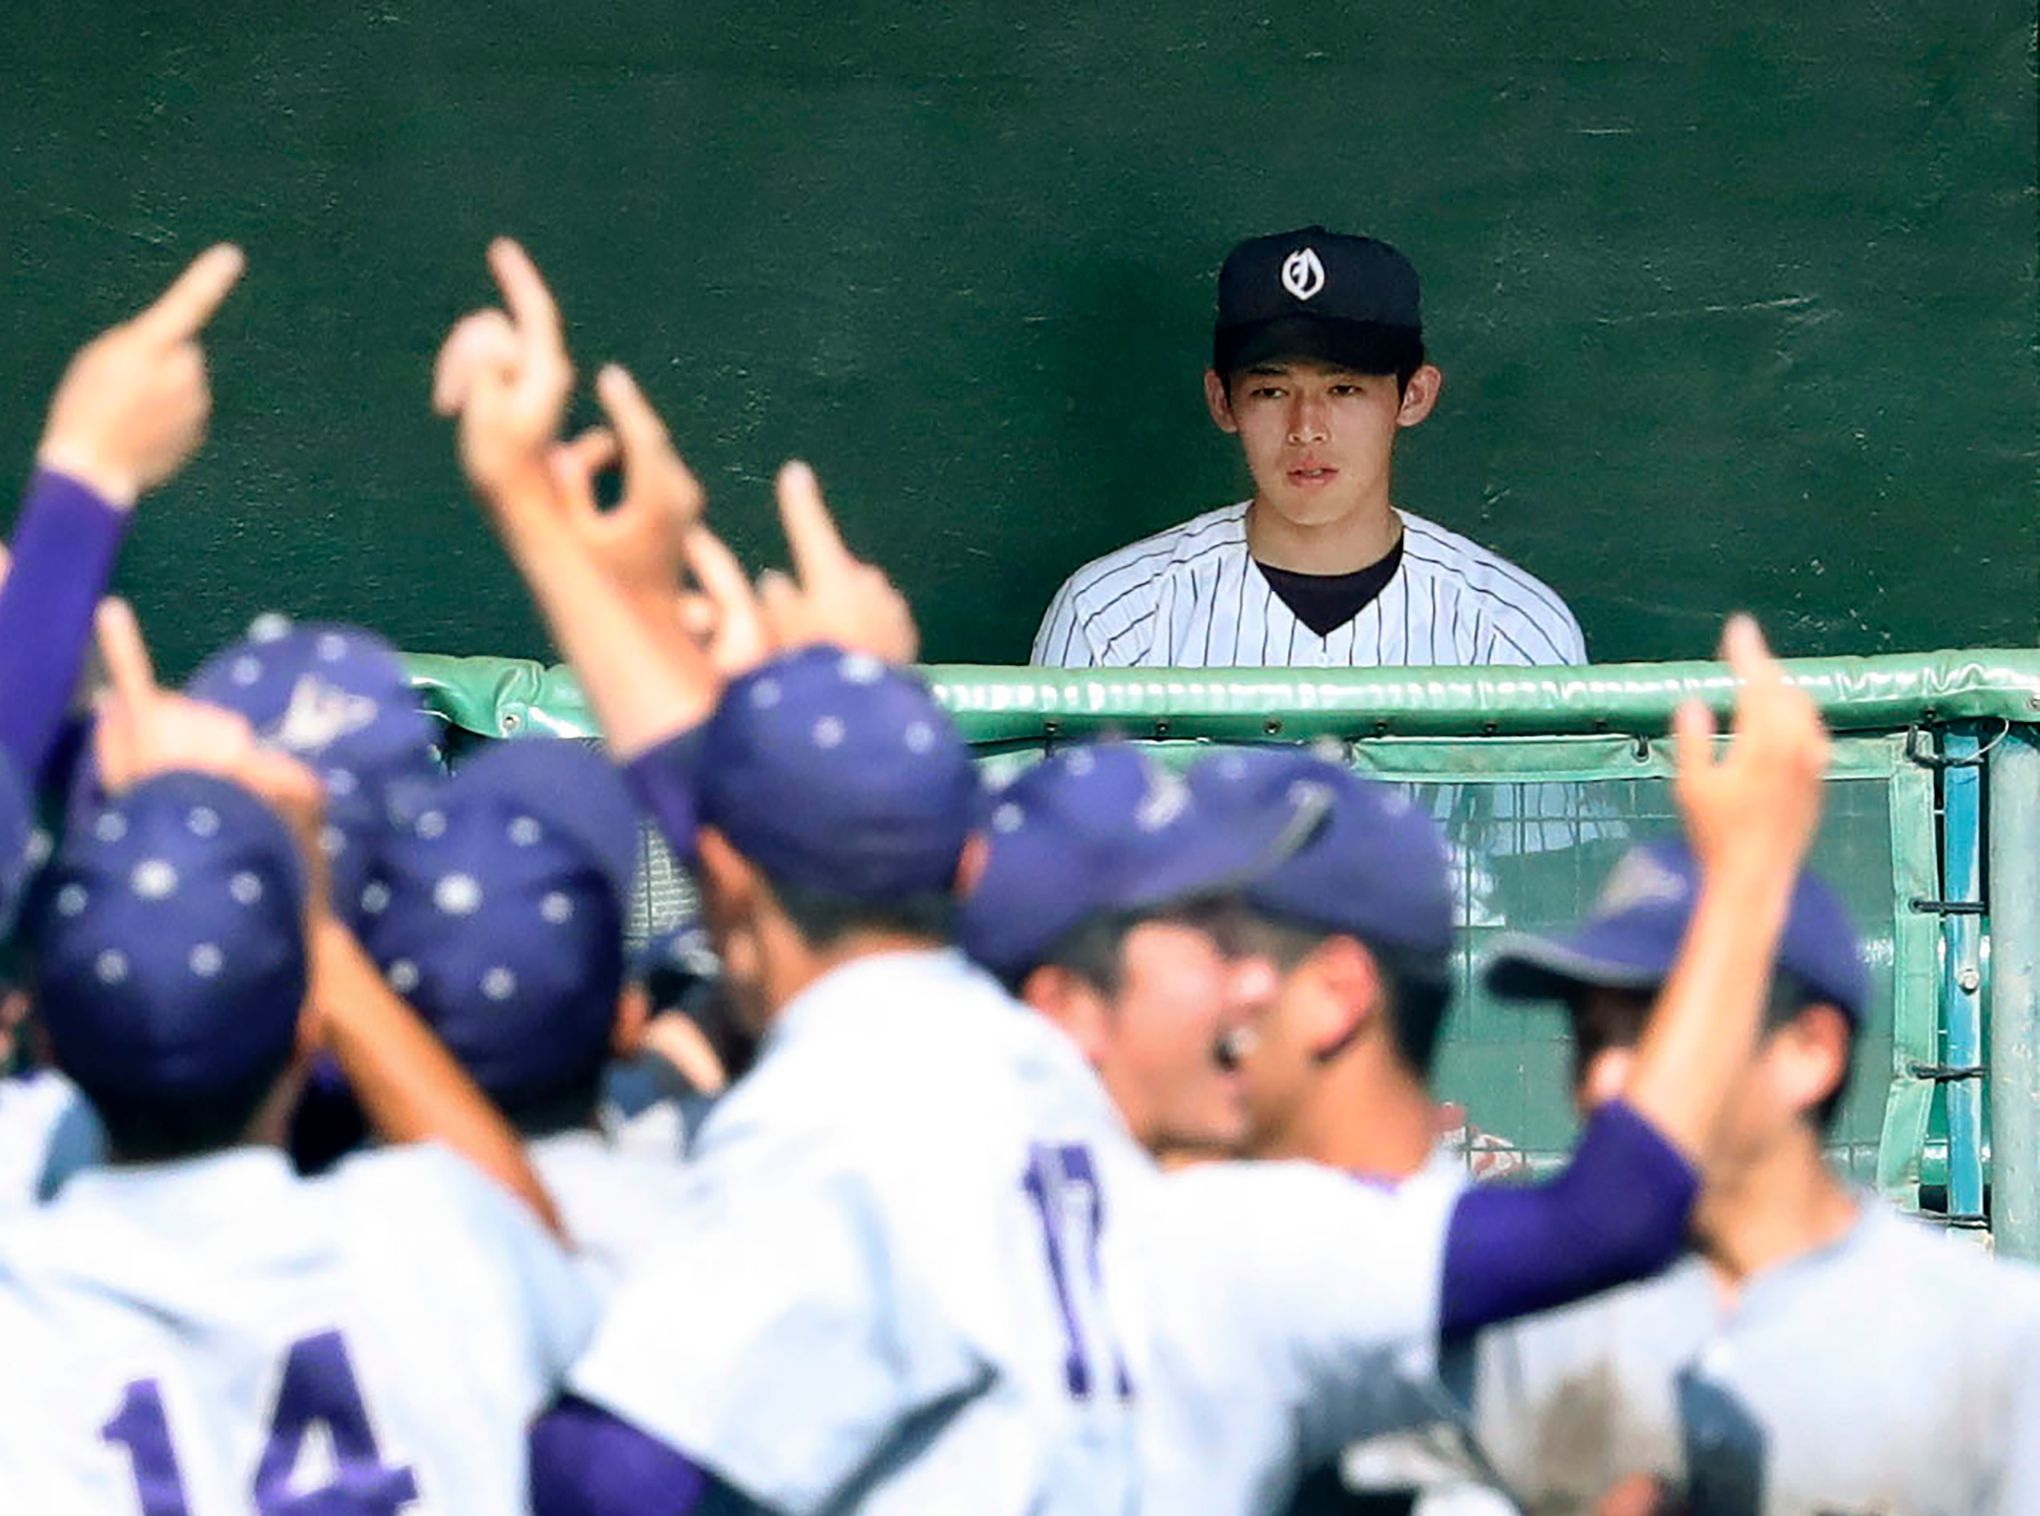 Pitcher Roki Sasaki Next 'Big Thing' From Japanese Baseball